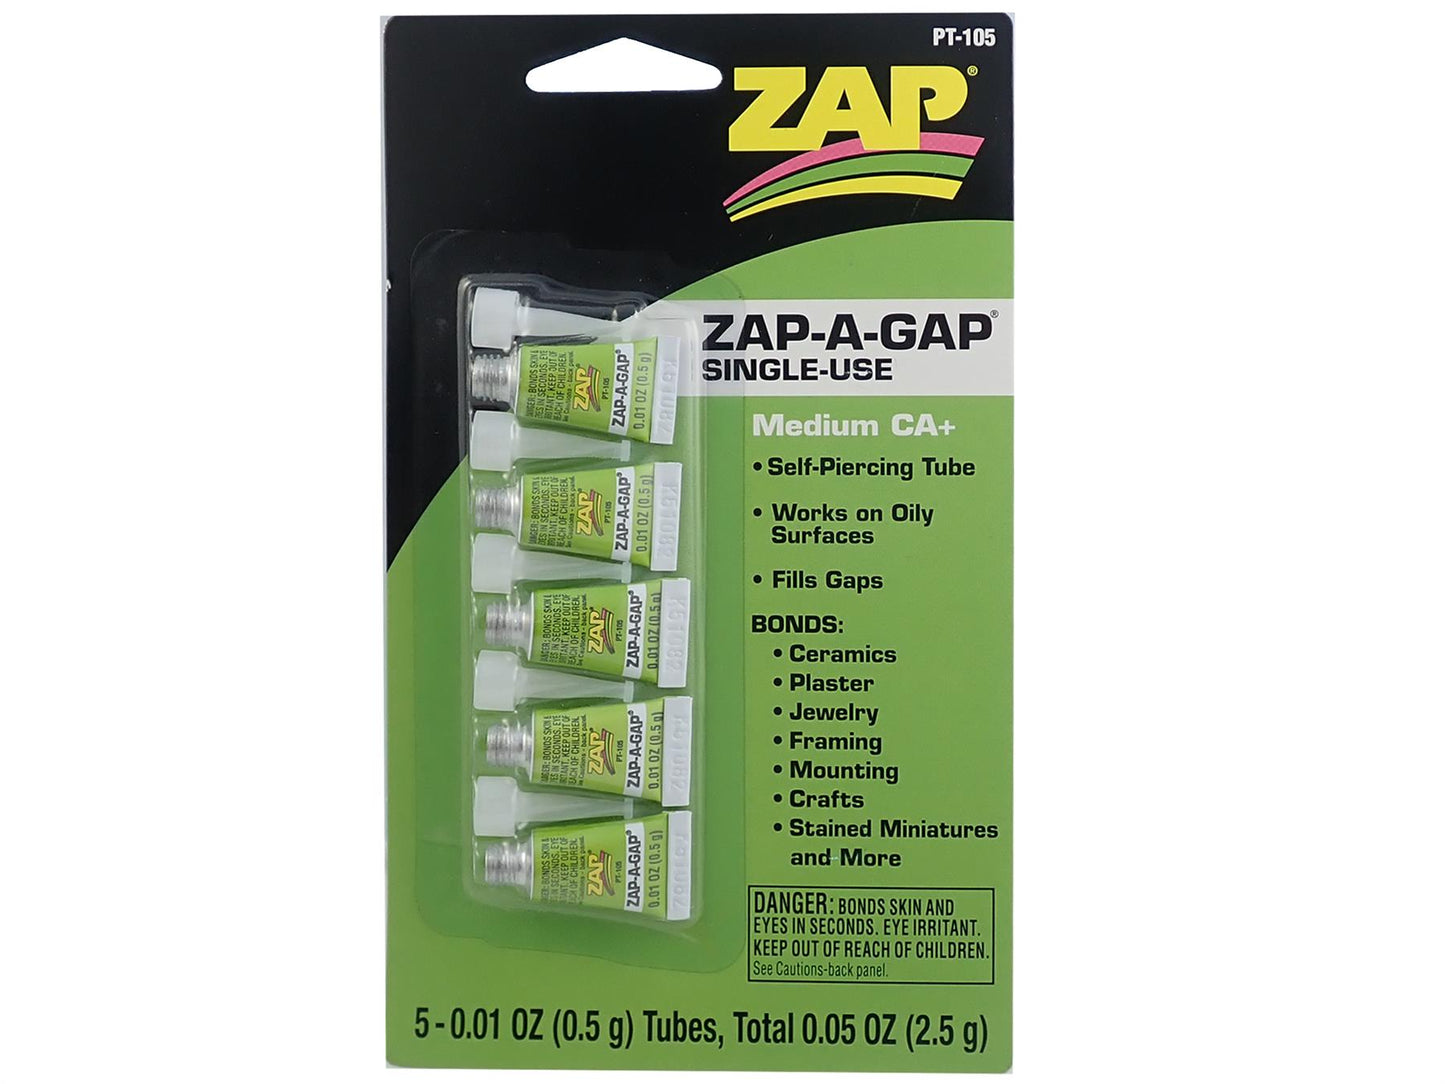 Zap PT-105 Ca Superglue - 0.5g Single Use, Pack of 5, Medium, 0.01Oz